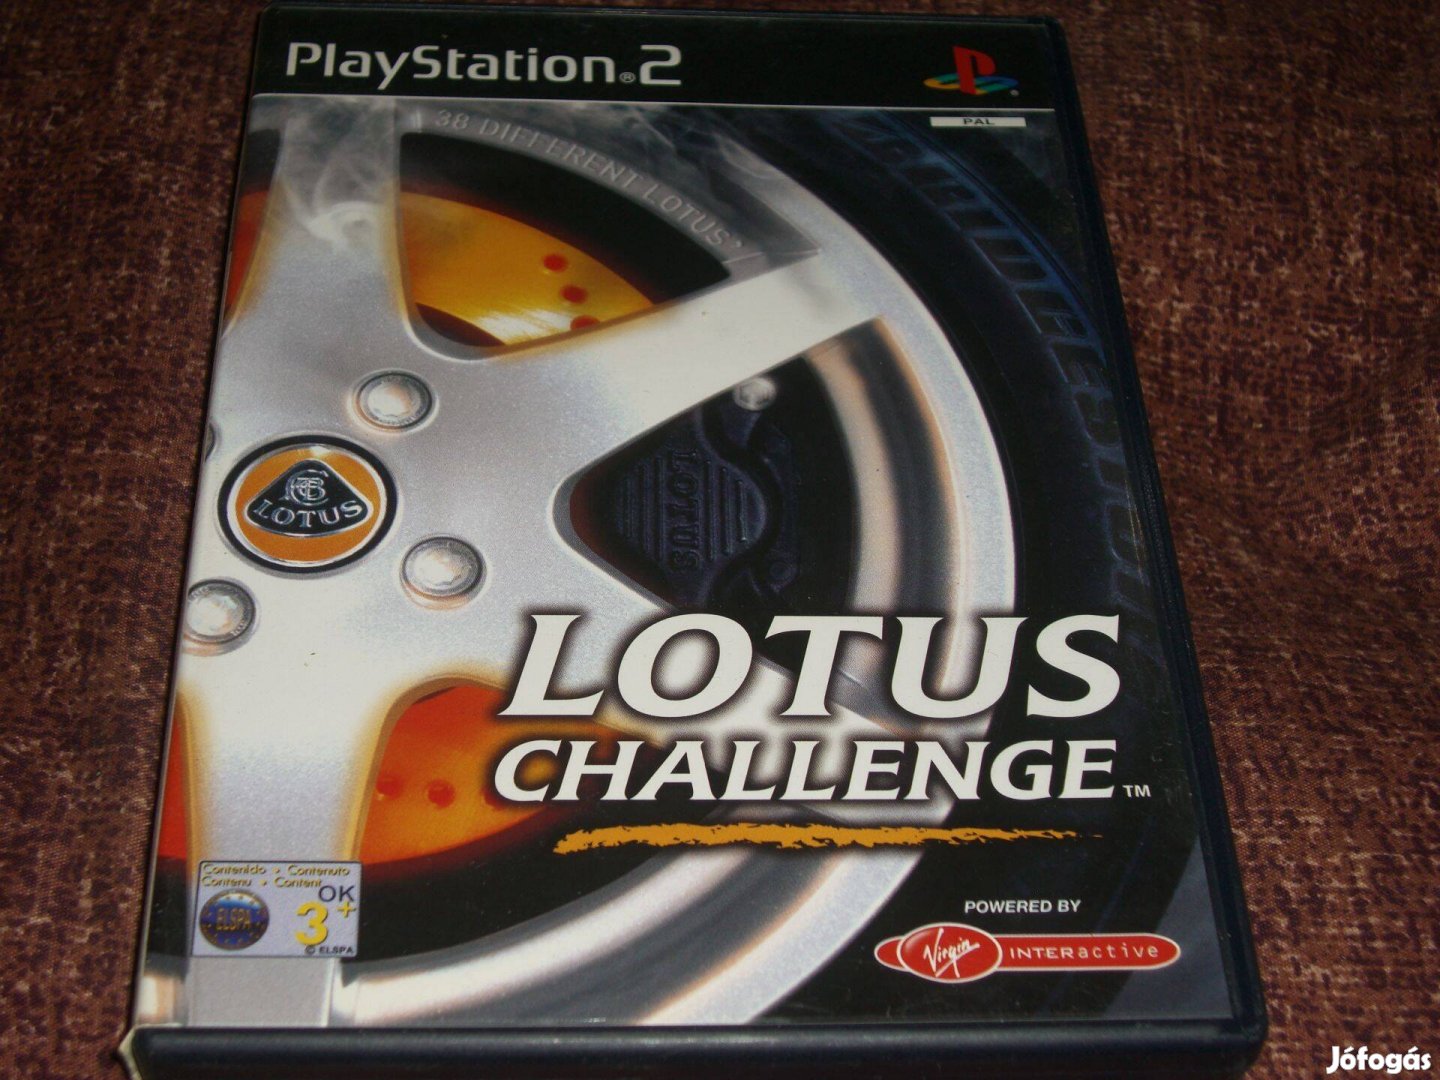 Lotus Challenge Ps2 eredeti lemez ( 2500 Ft )